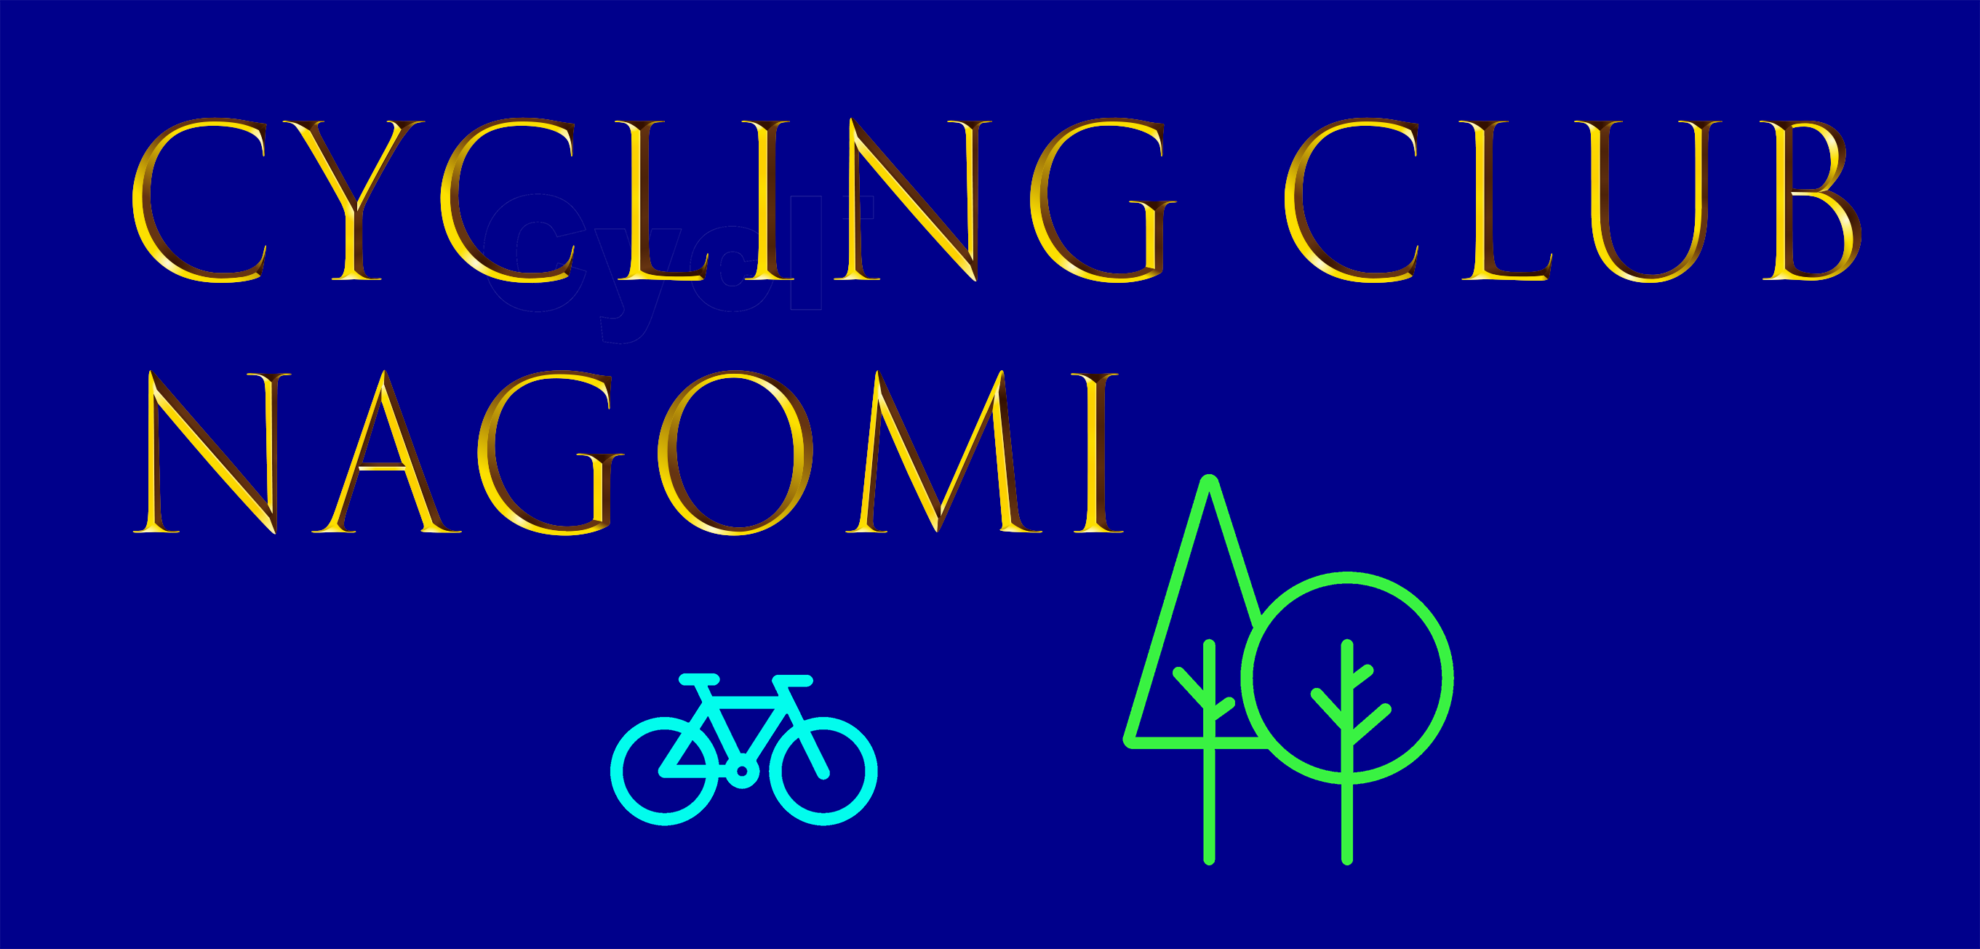 Cycling Club Nagomi